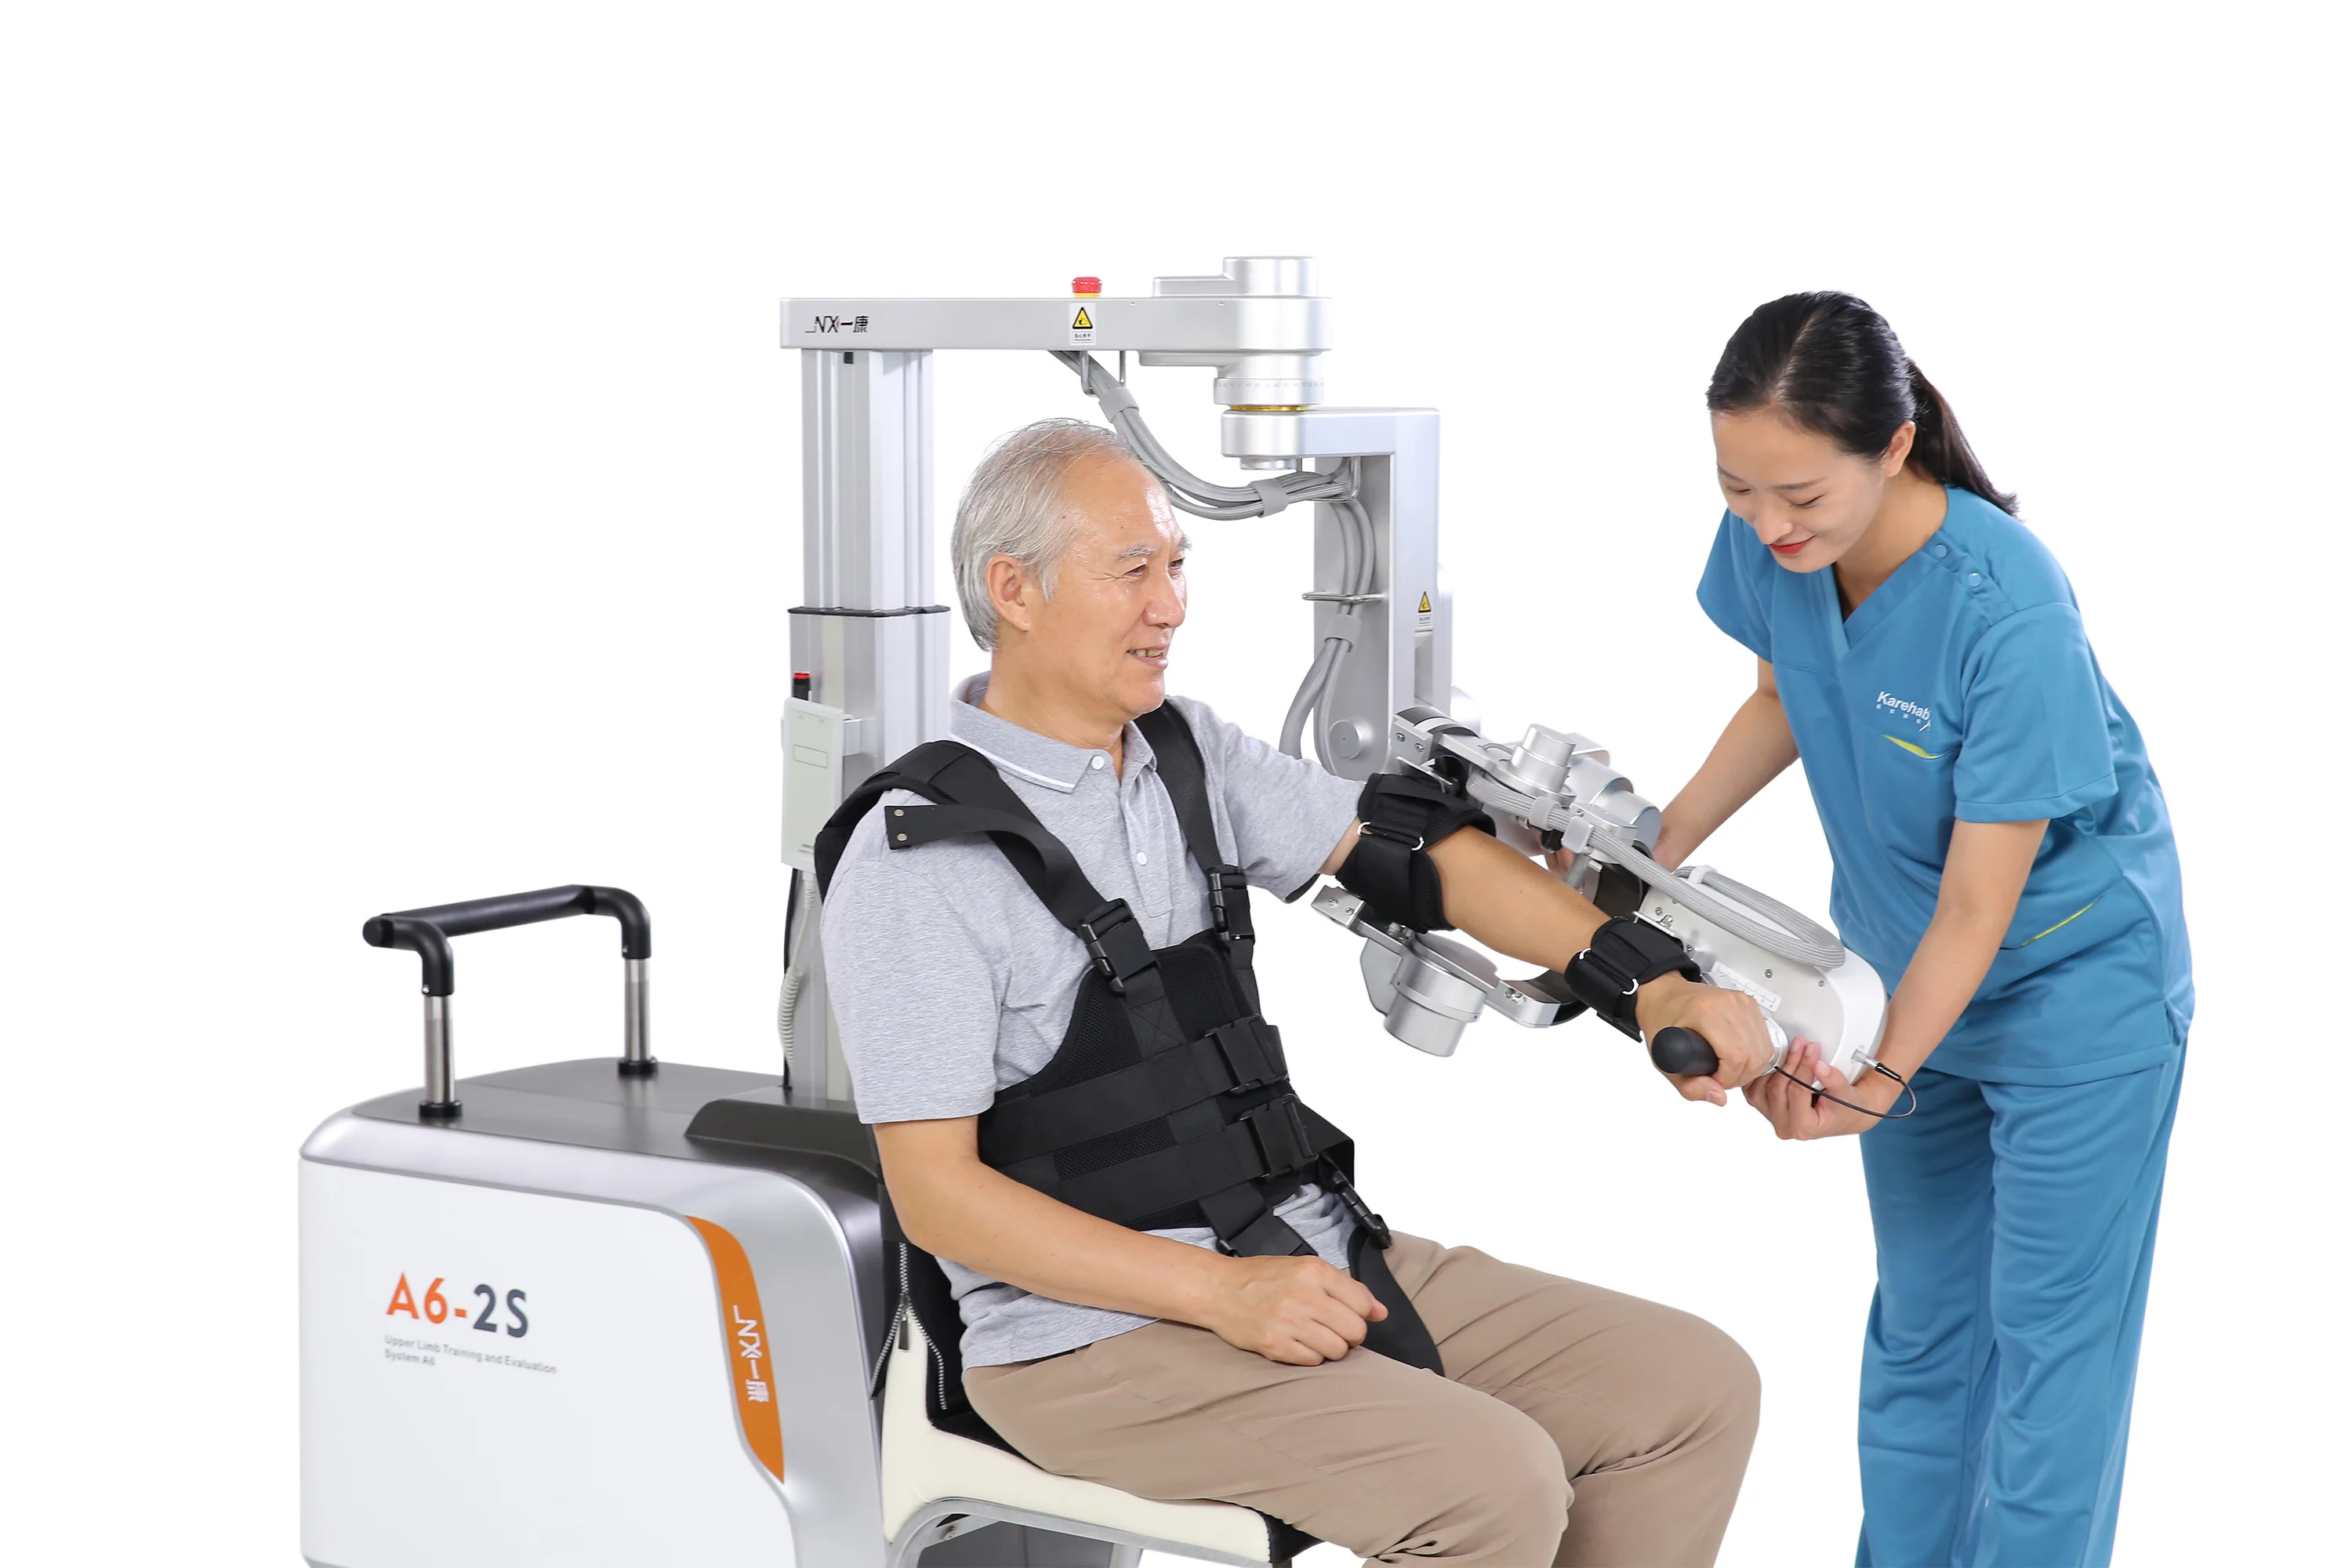 medical supplies arm rehabilitation exoskeleton robot rehab equipment upper limbs arm exoskeleton robotic rehabilitation